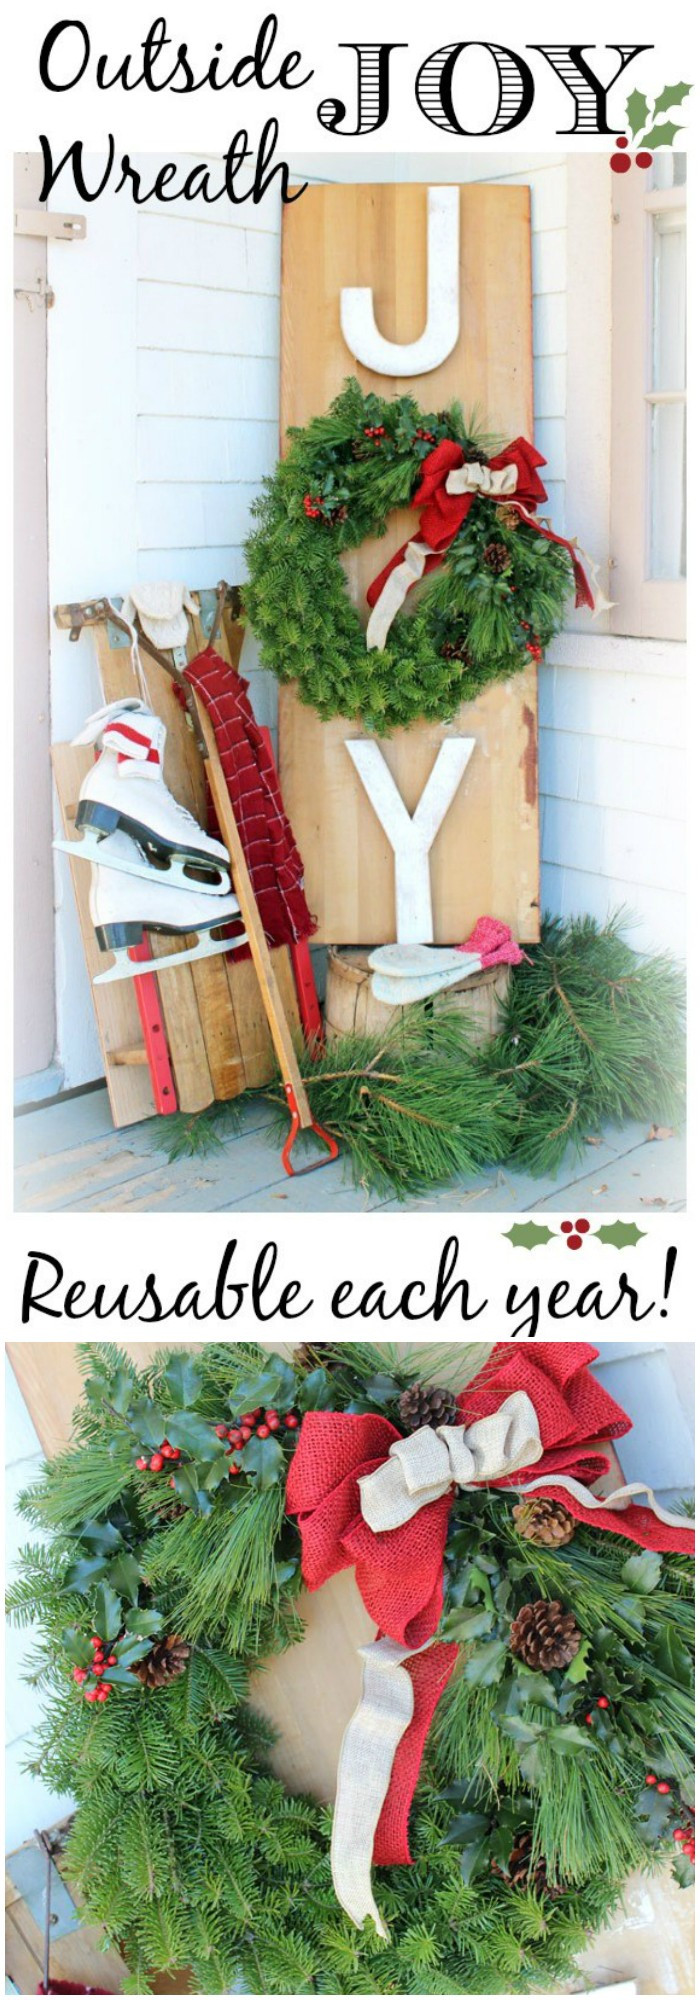 Cheap DIY Outdoor Christmas Decorations
 21 Cheap DIY Outdoor Christmas Decorations • DIY Home Decor